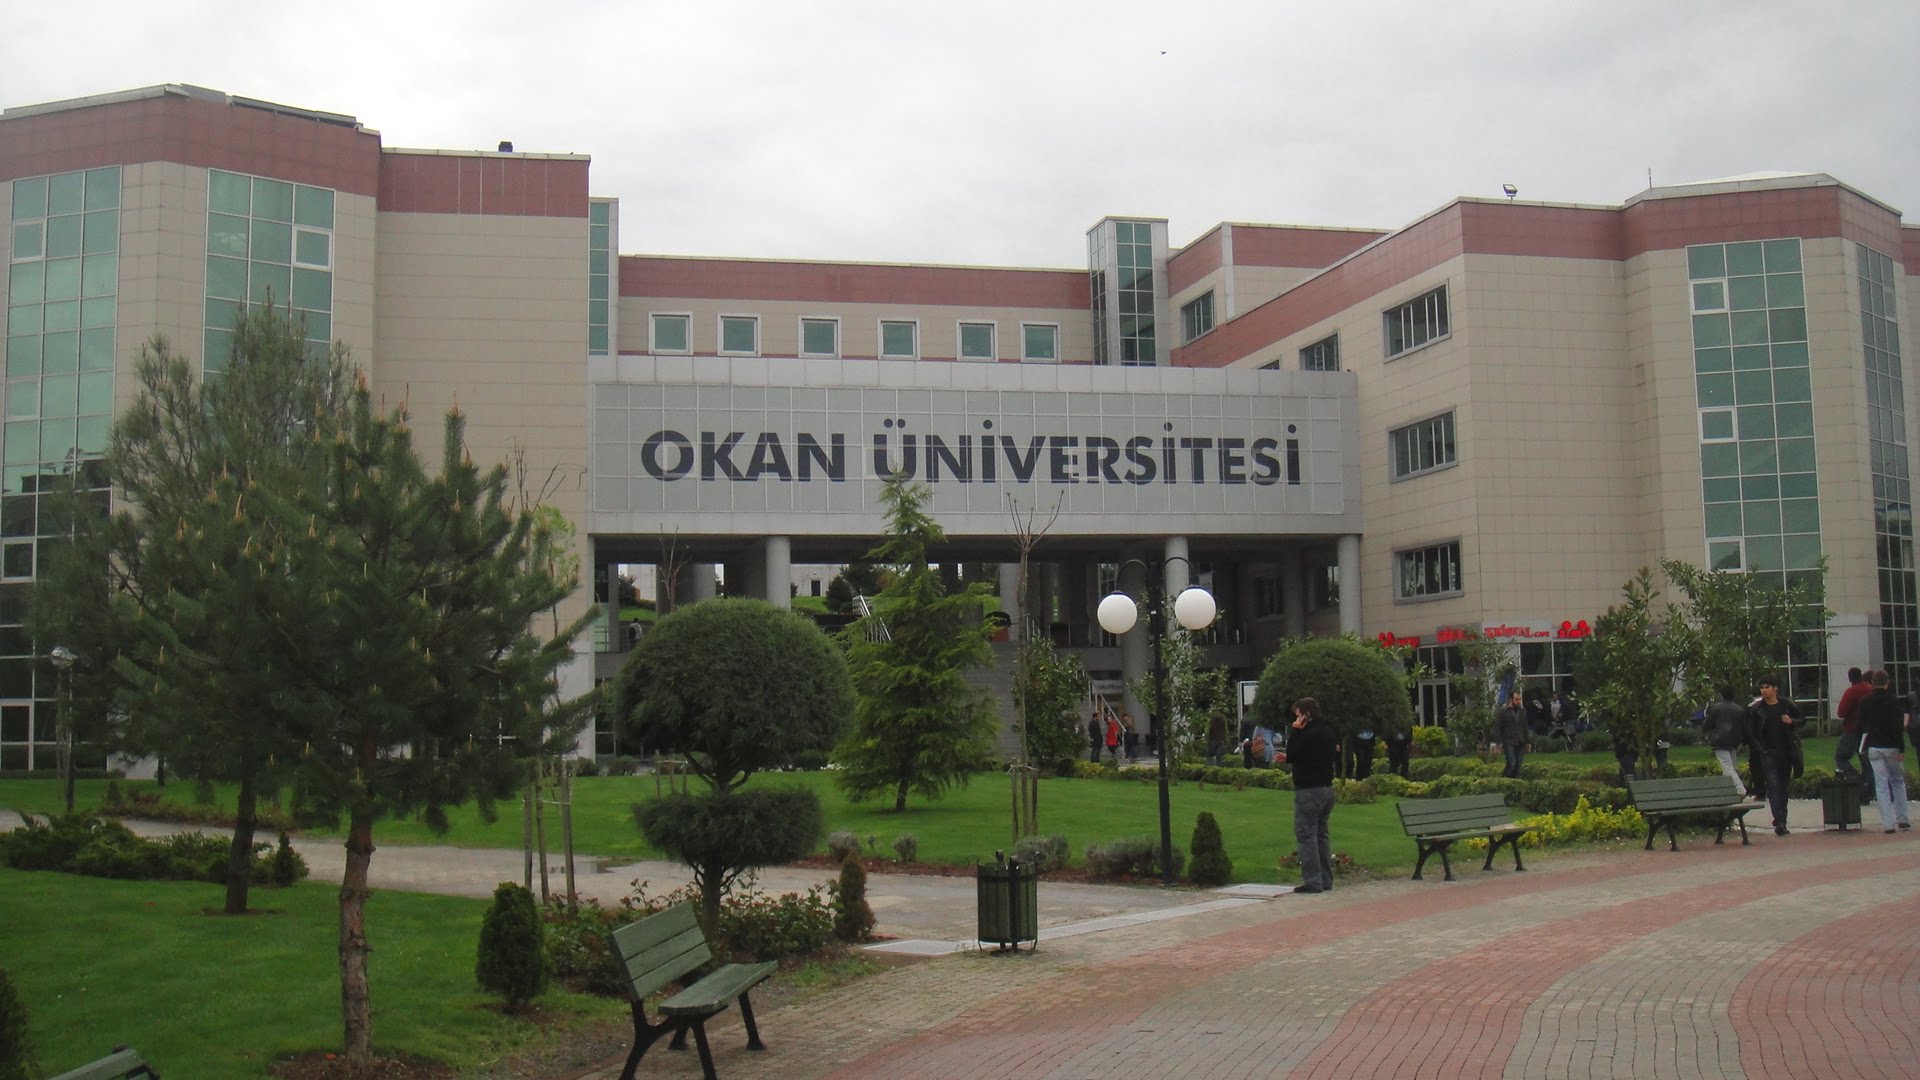 Why choose Okan University?